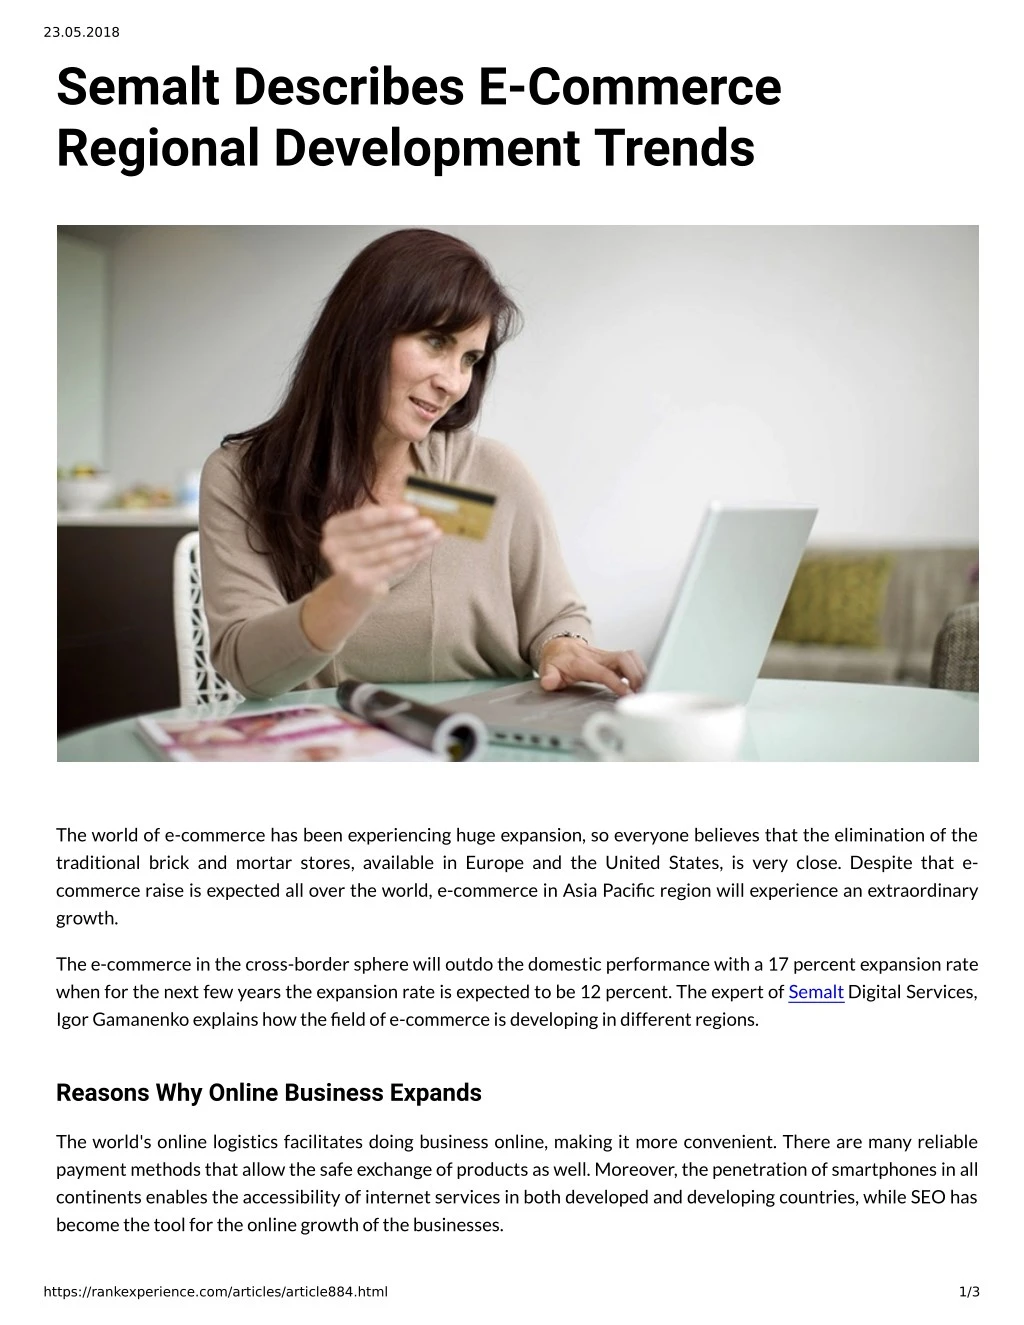 23 05 2018 semalt describes e commerce regional